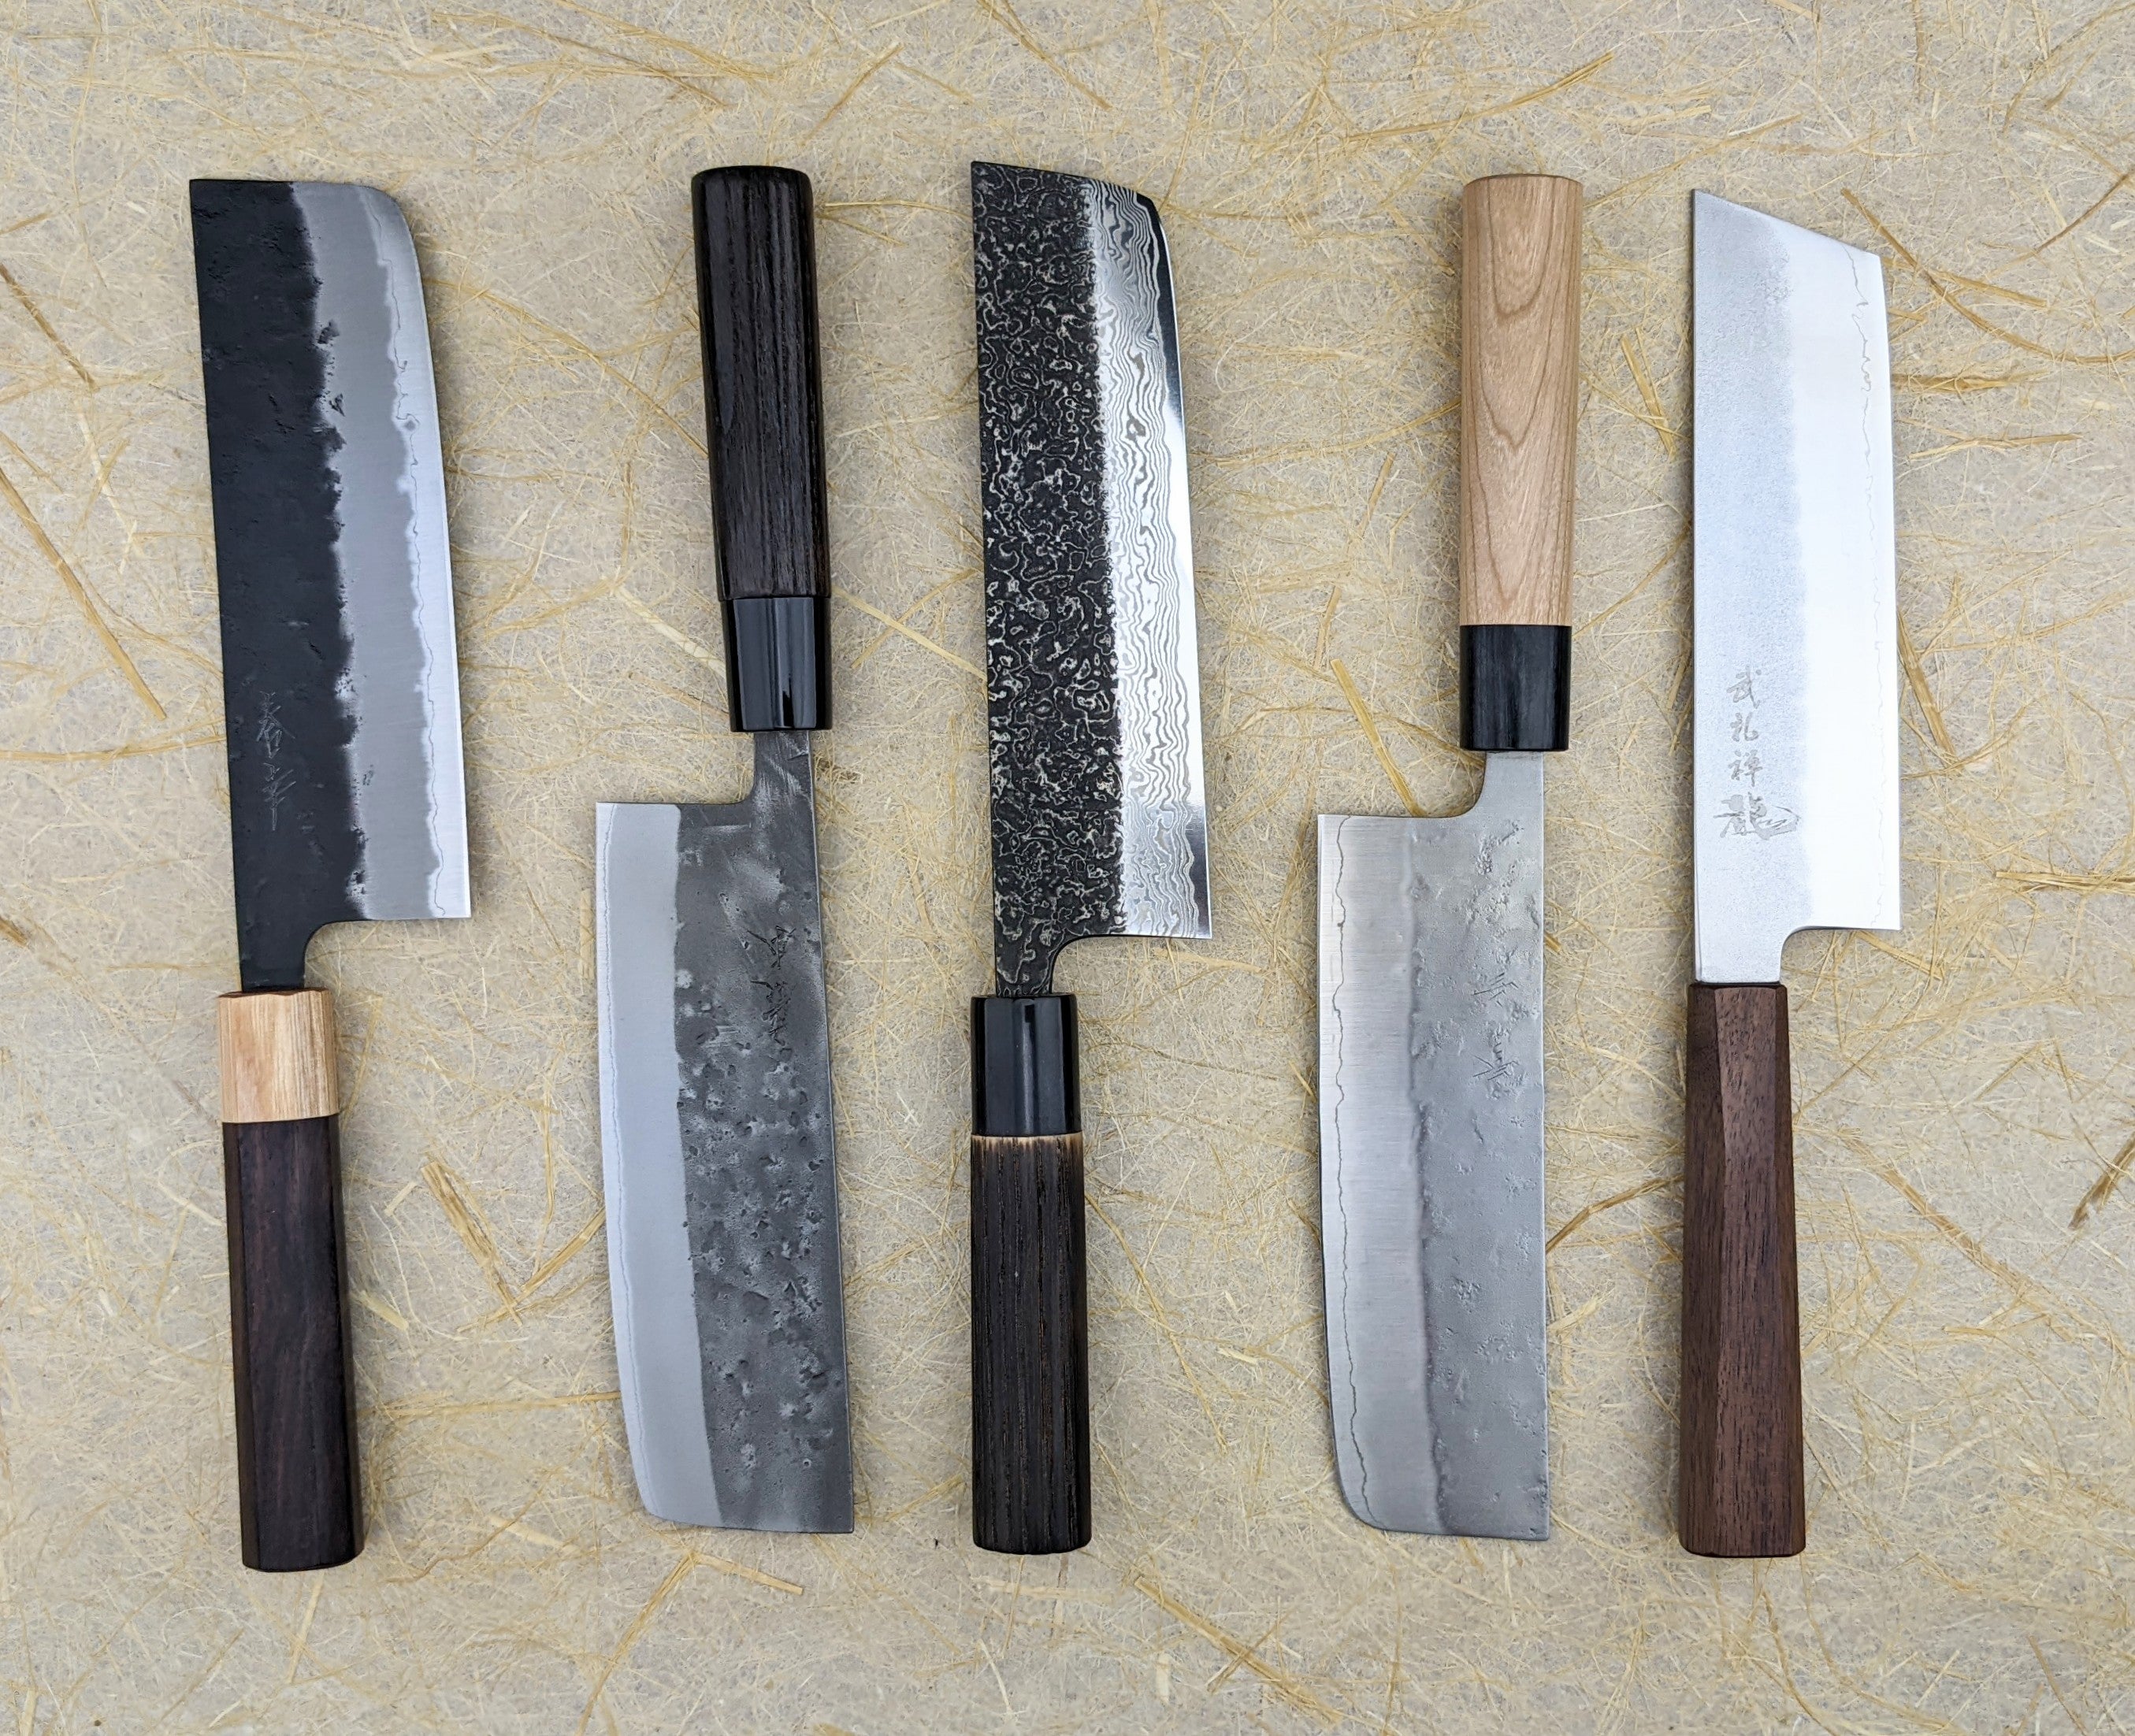 Traditional making with carbon steel. Yamamoto nakiri kitchen knife